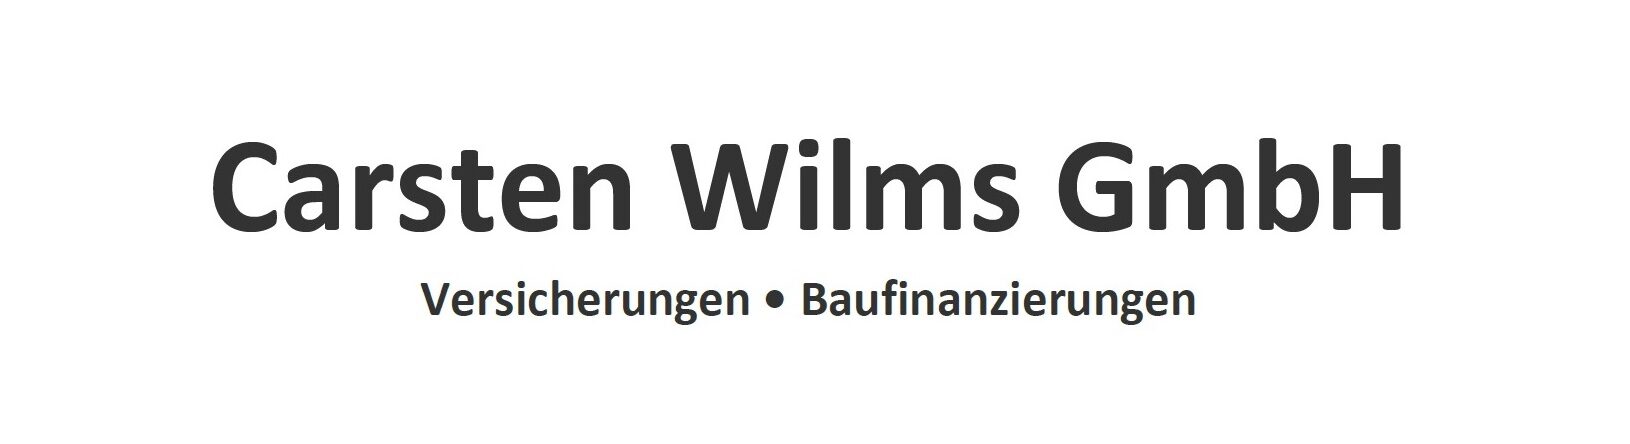 Carsten Wilms Partner